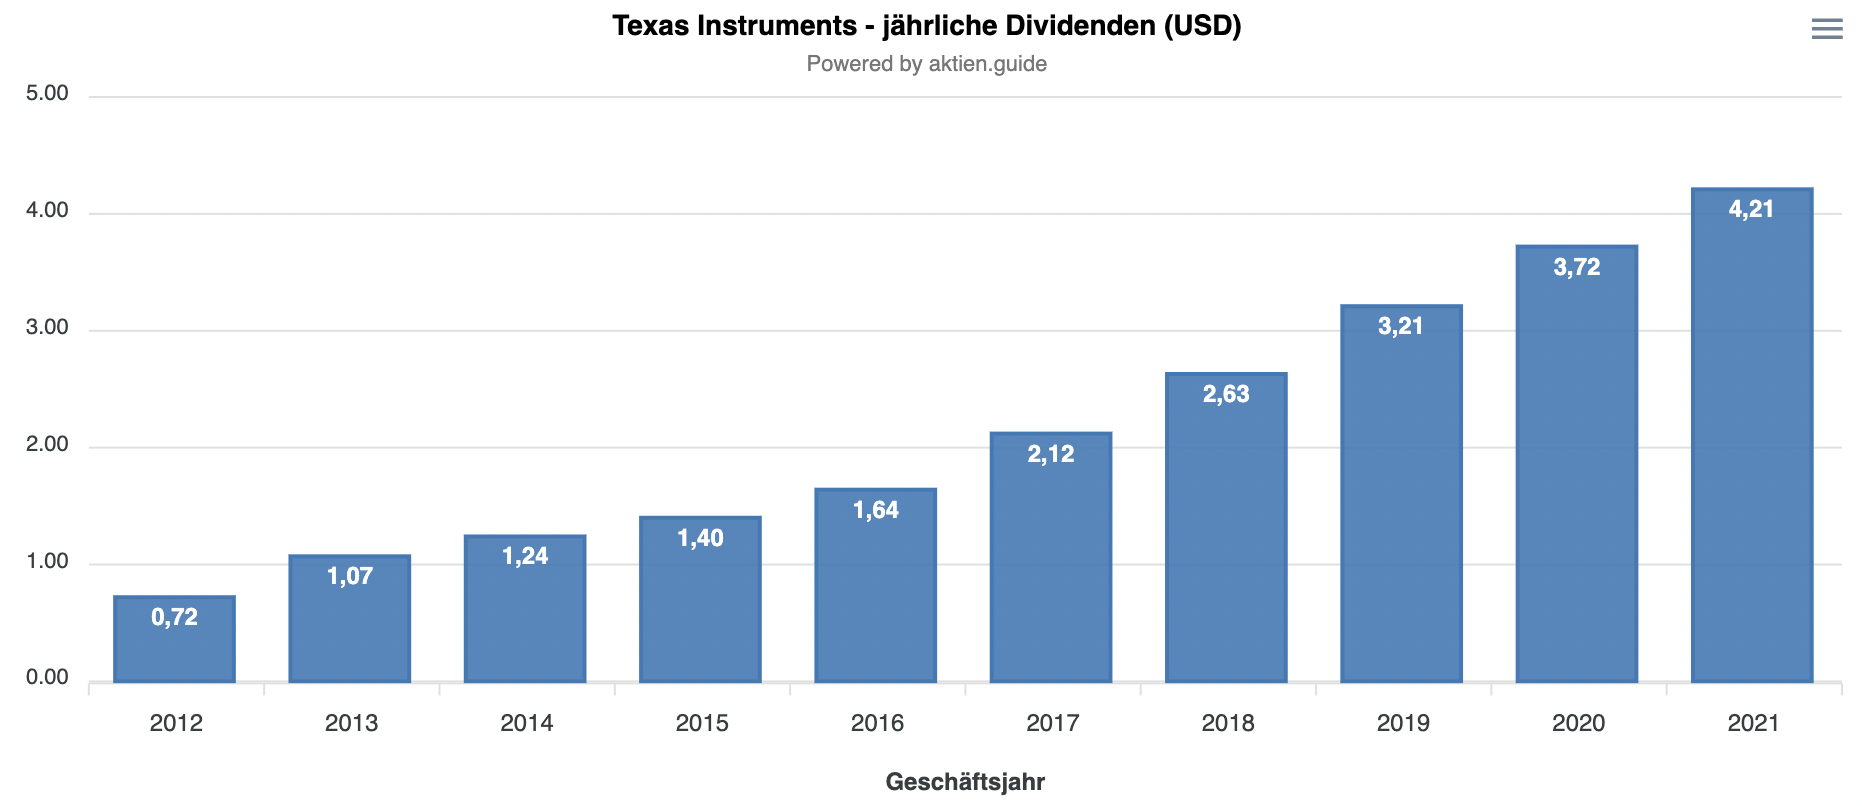 Texas Instruments Dividenden